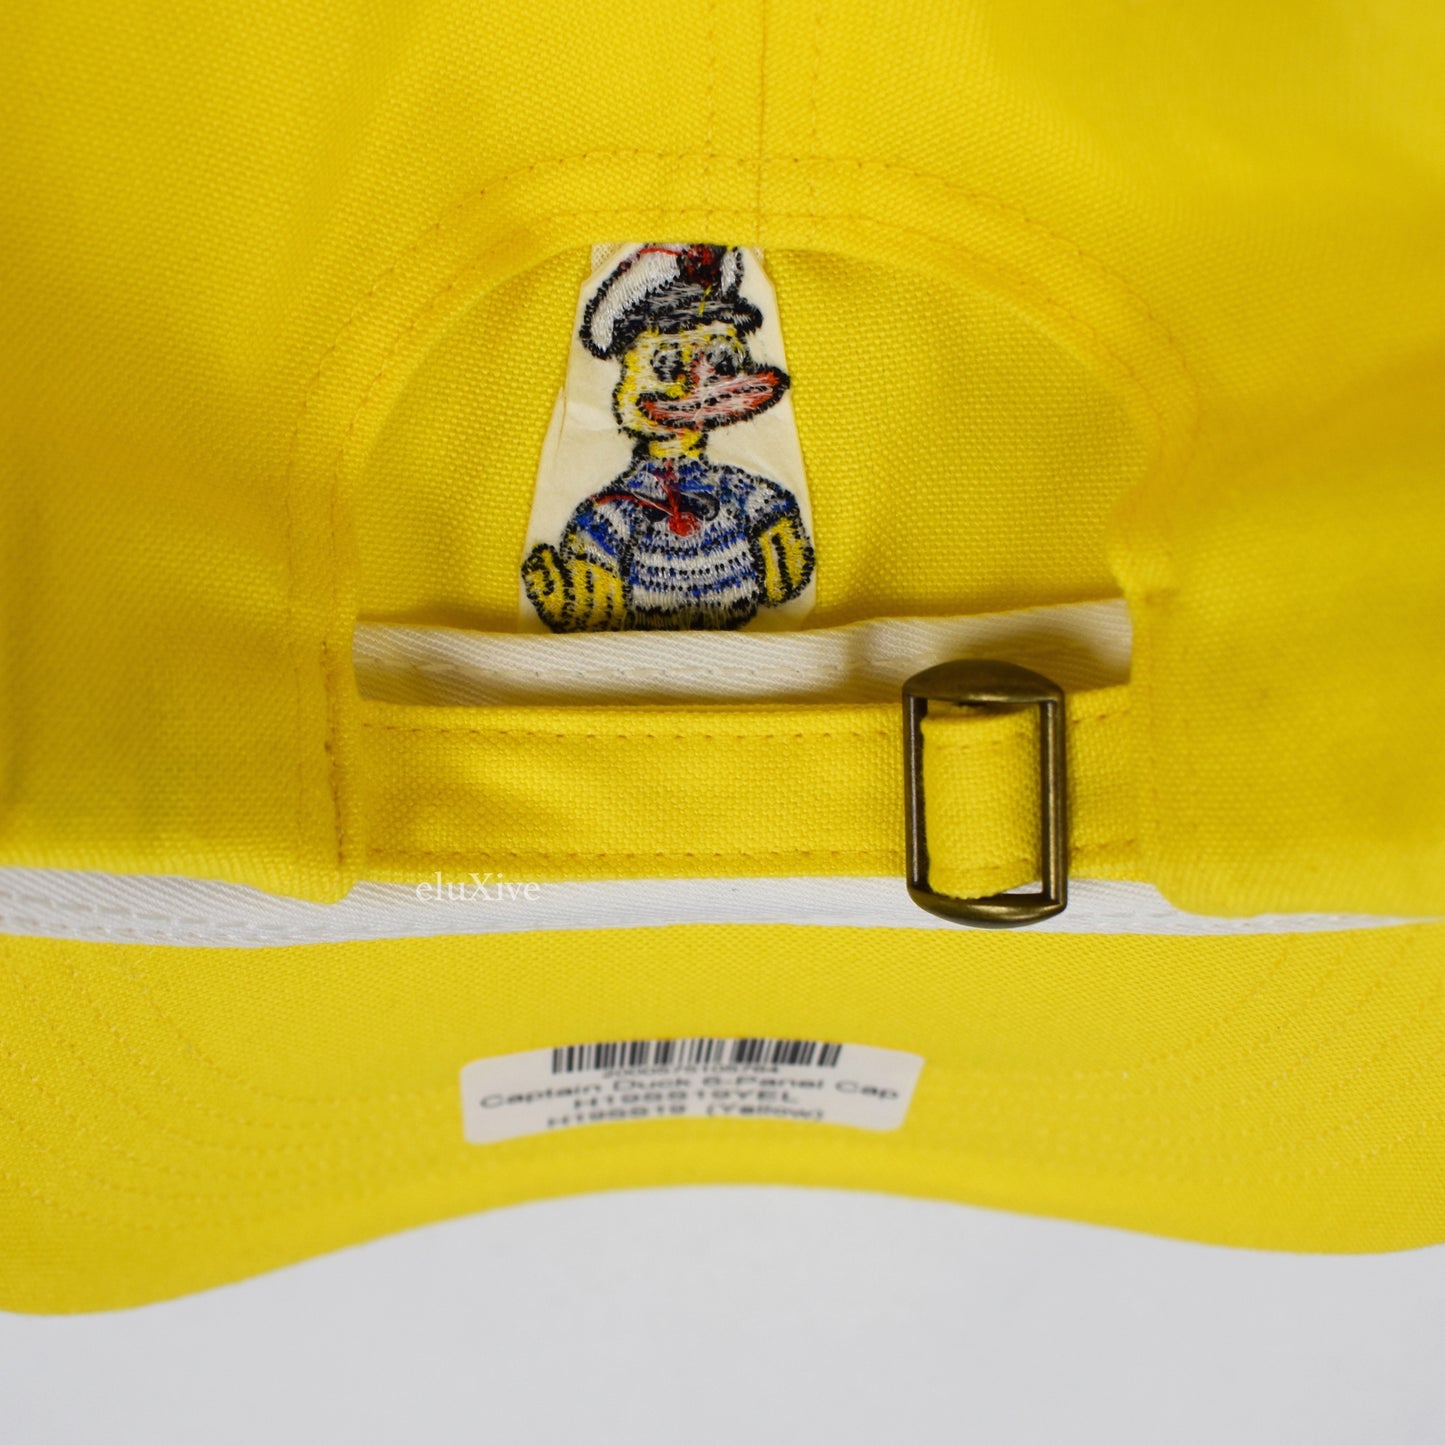 Noah - Captain Duck Core Logo Hat (Yellow)